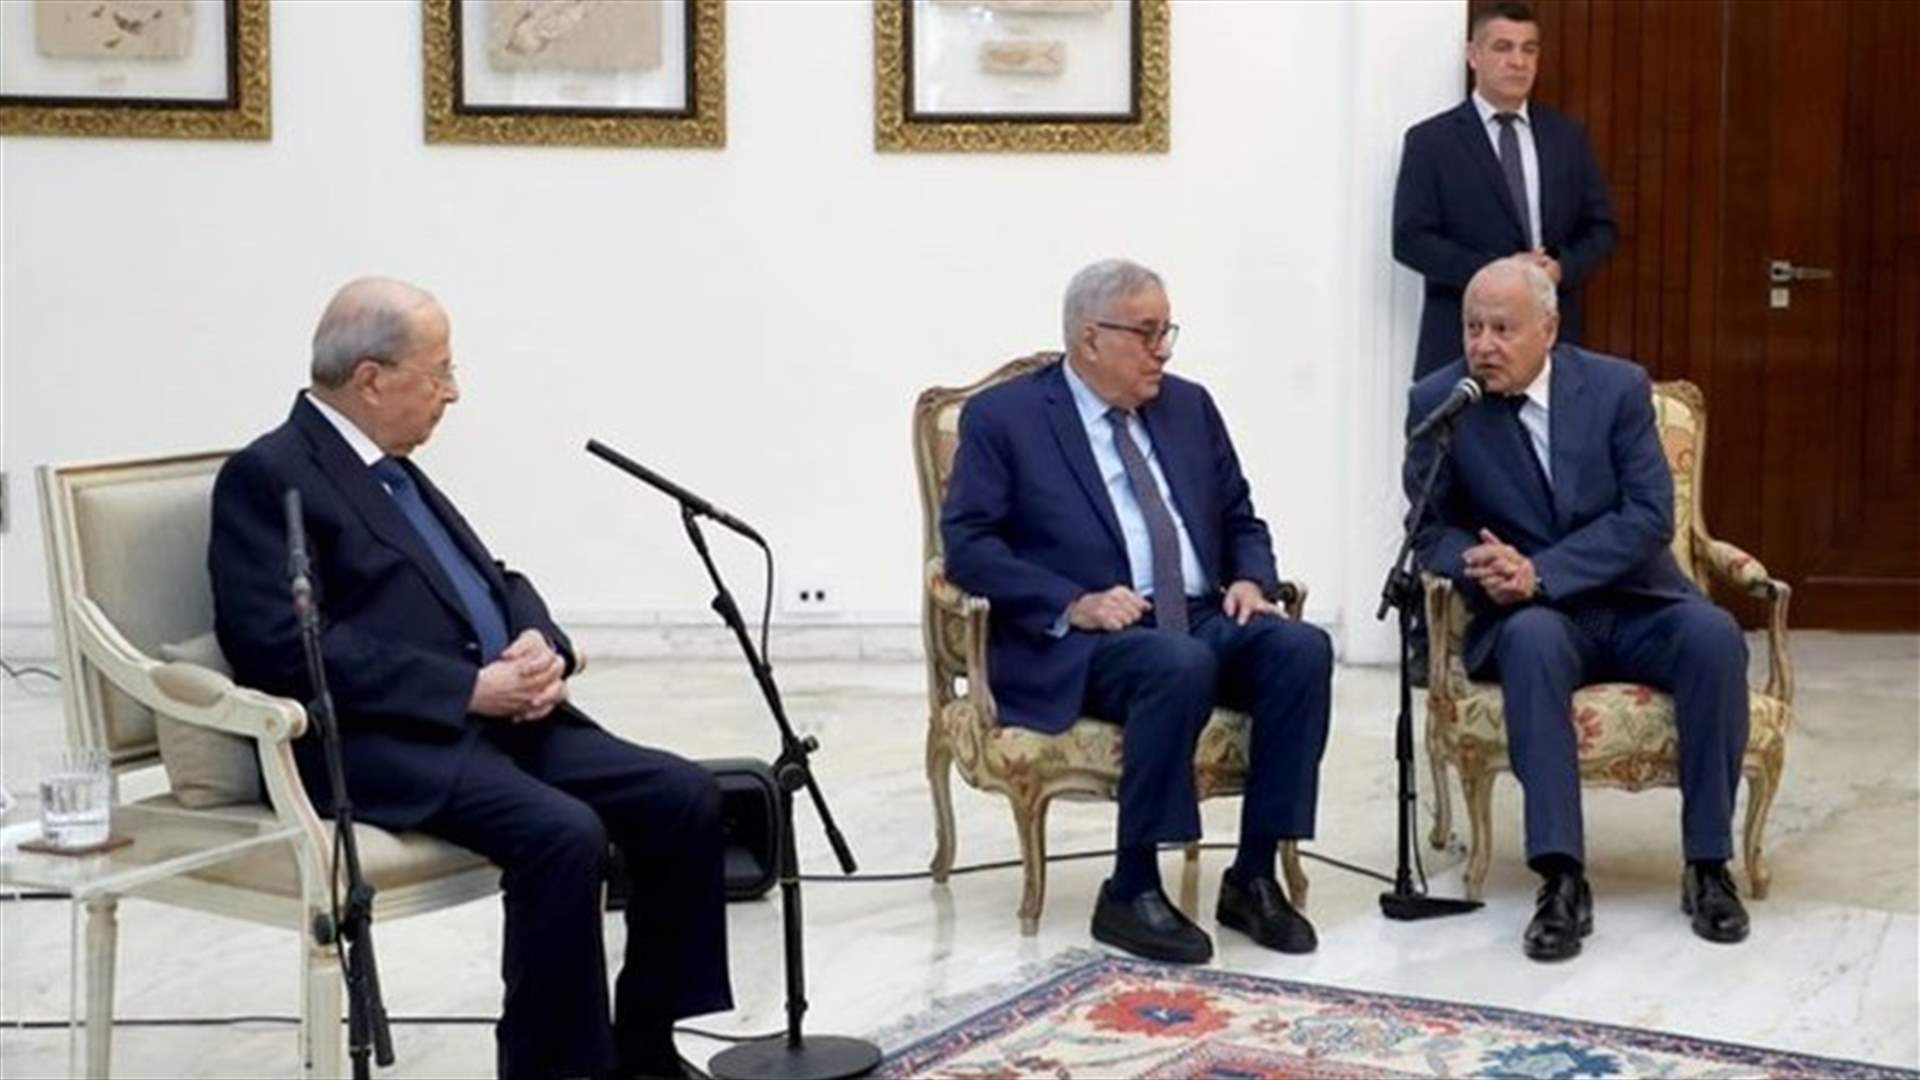 Arab FMs meet with President Aoun